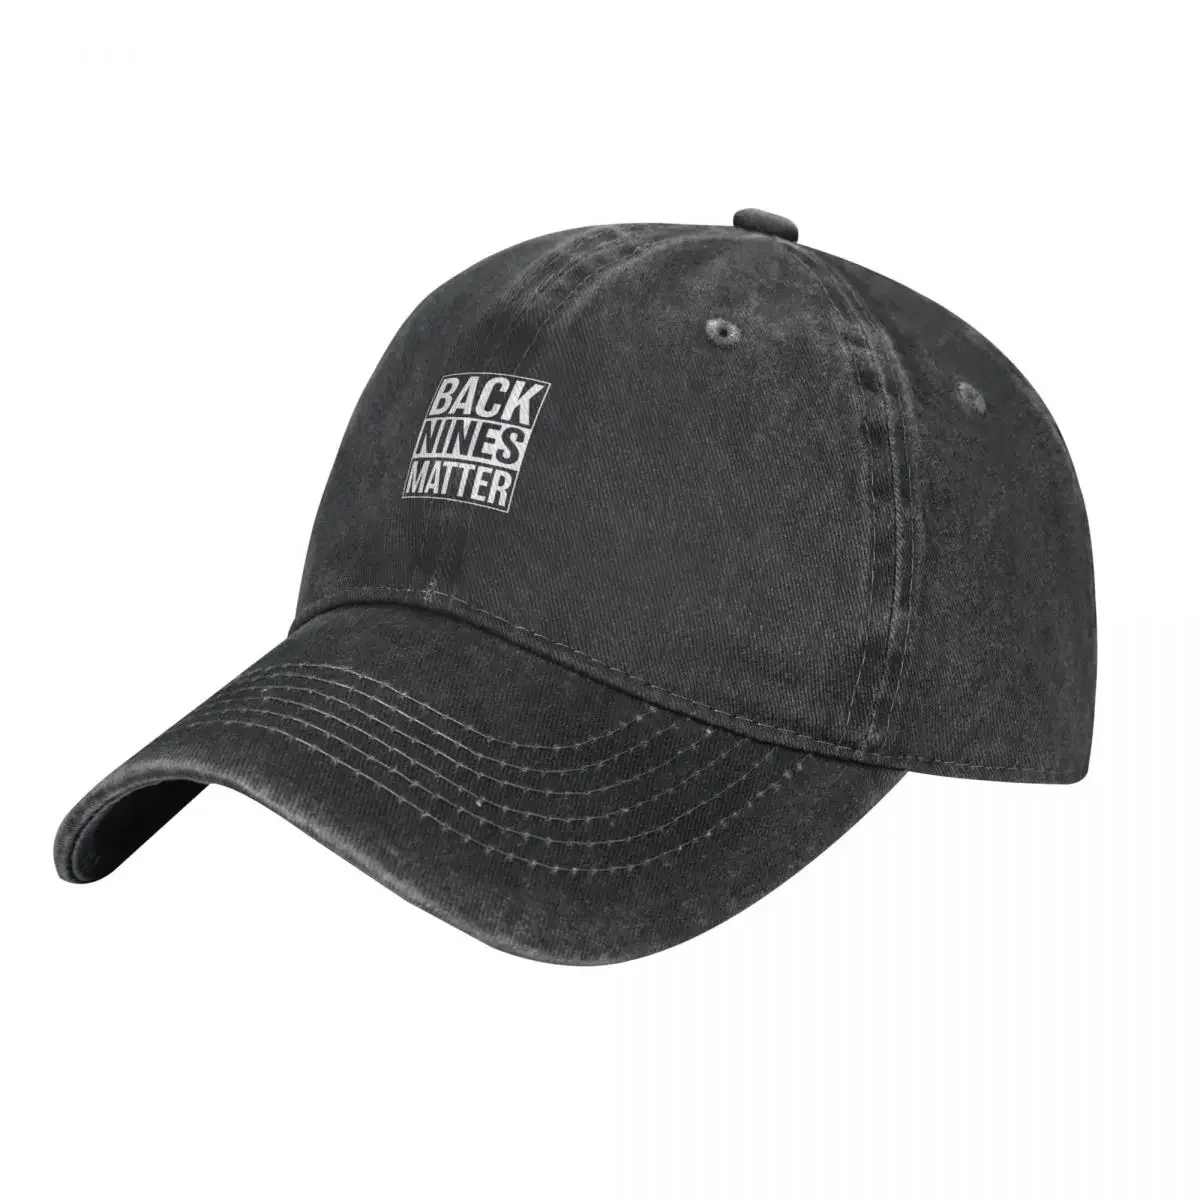 

Back Nines Matter Embroidered Golf Cowboy Hat black foam party Hat birthday Women Men's